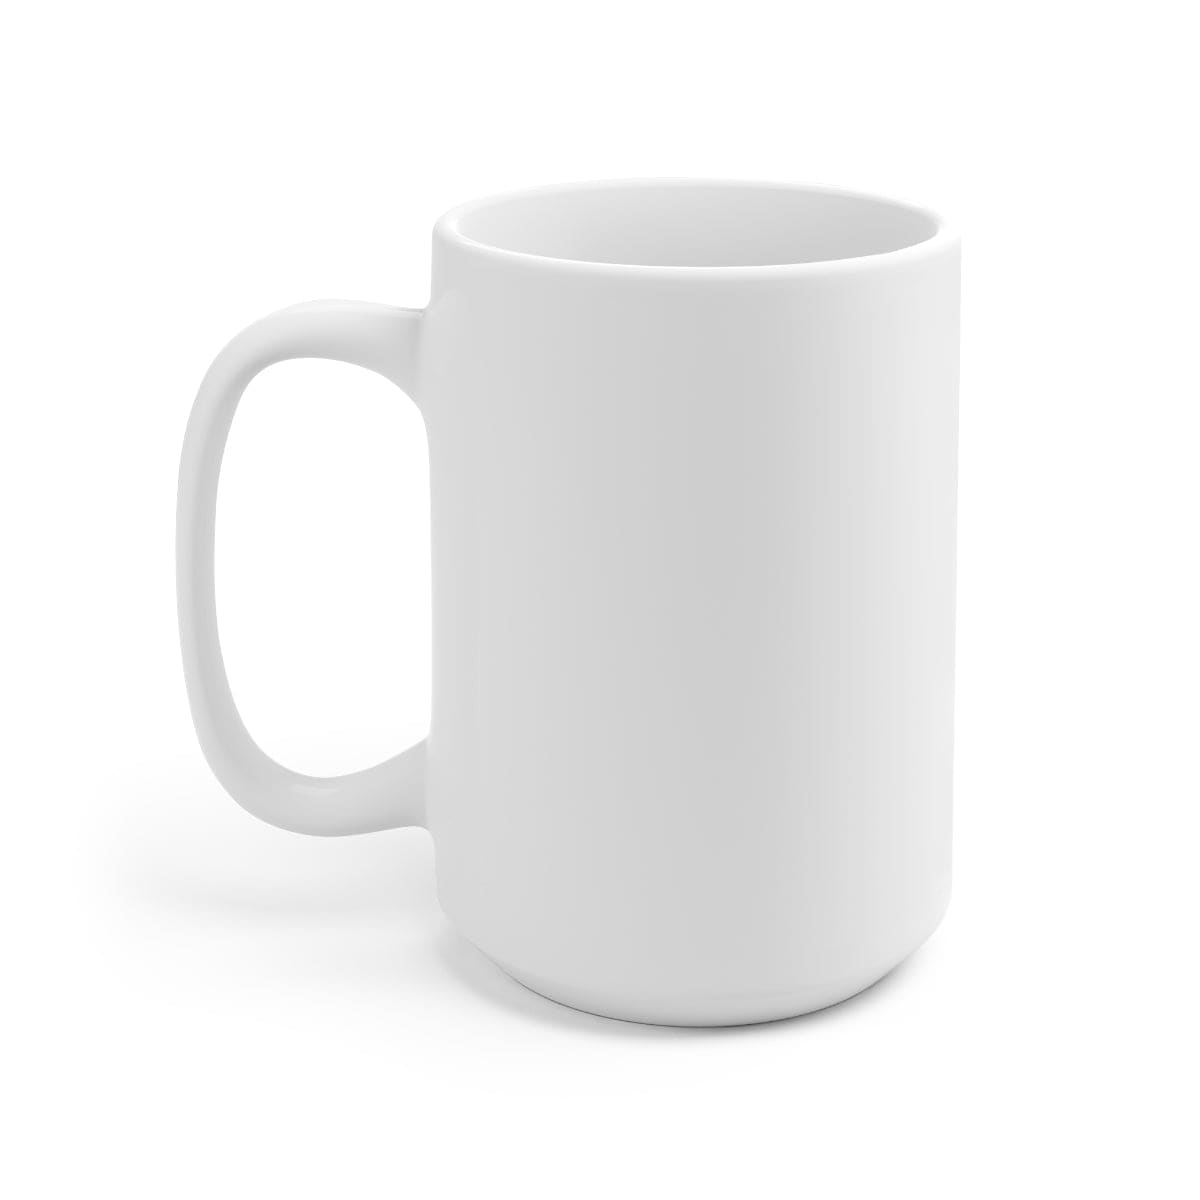 White Ceramic Mug 15oz - Decorative | Mugs